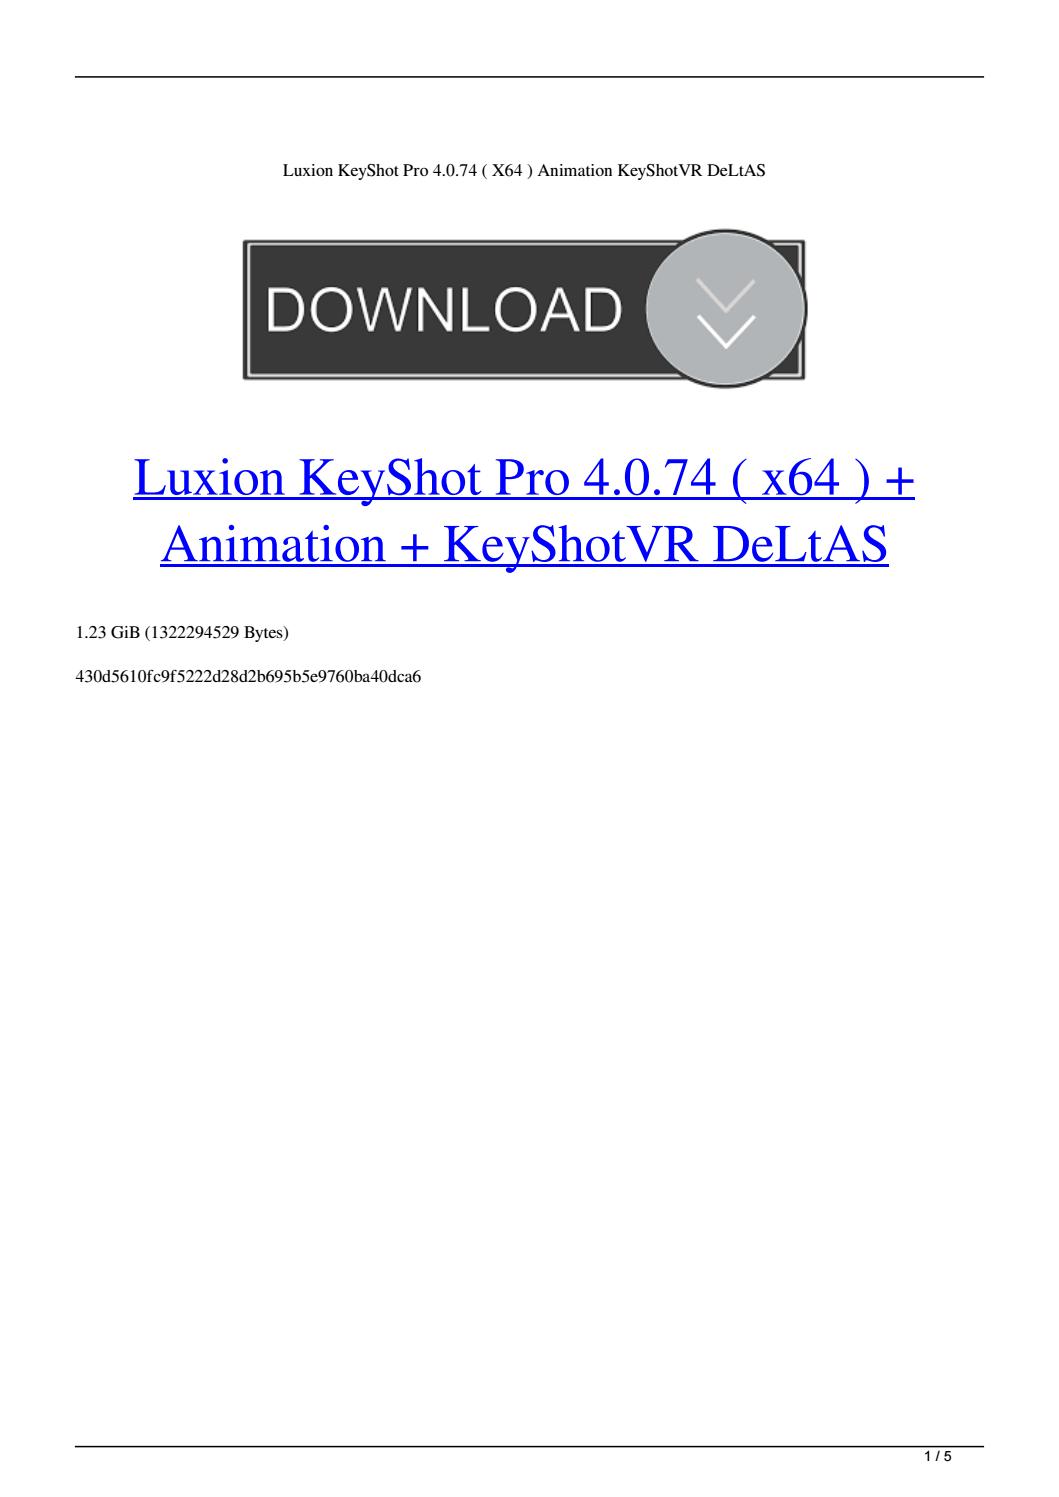 Luxion KeyShot Pro 9.0.286 Win 8.1.61 macOS Free Download